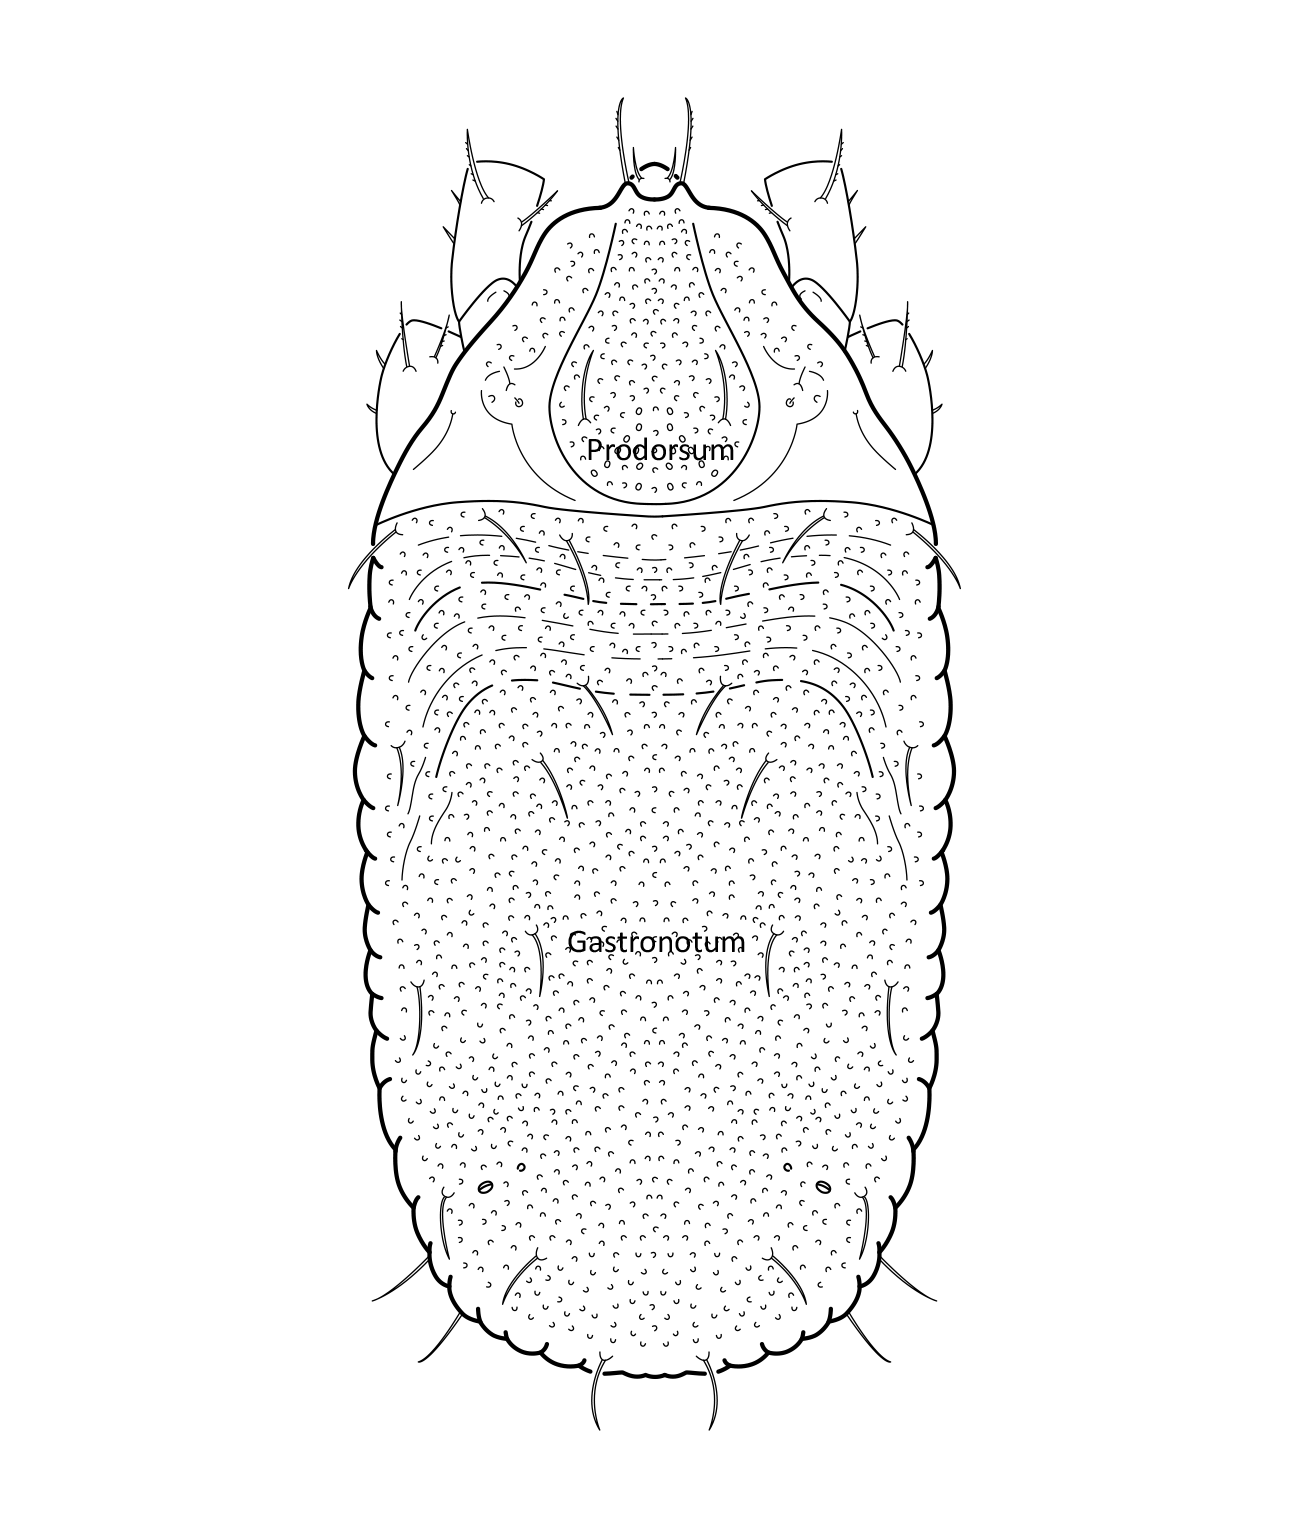 : Platynothrus punctatus.